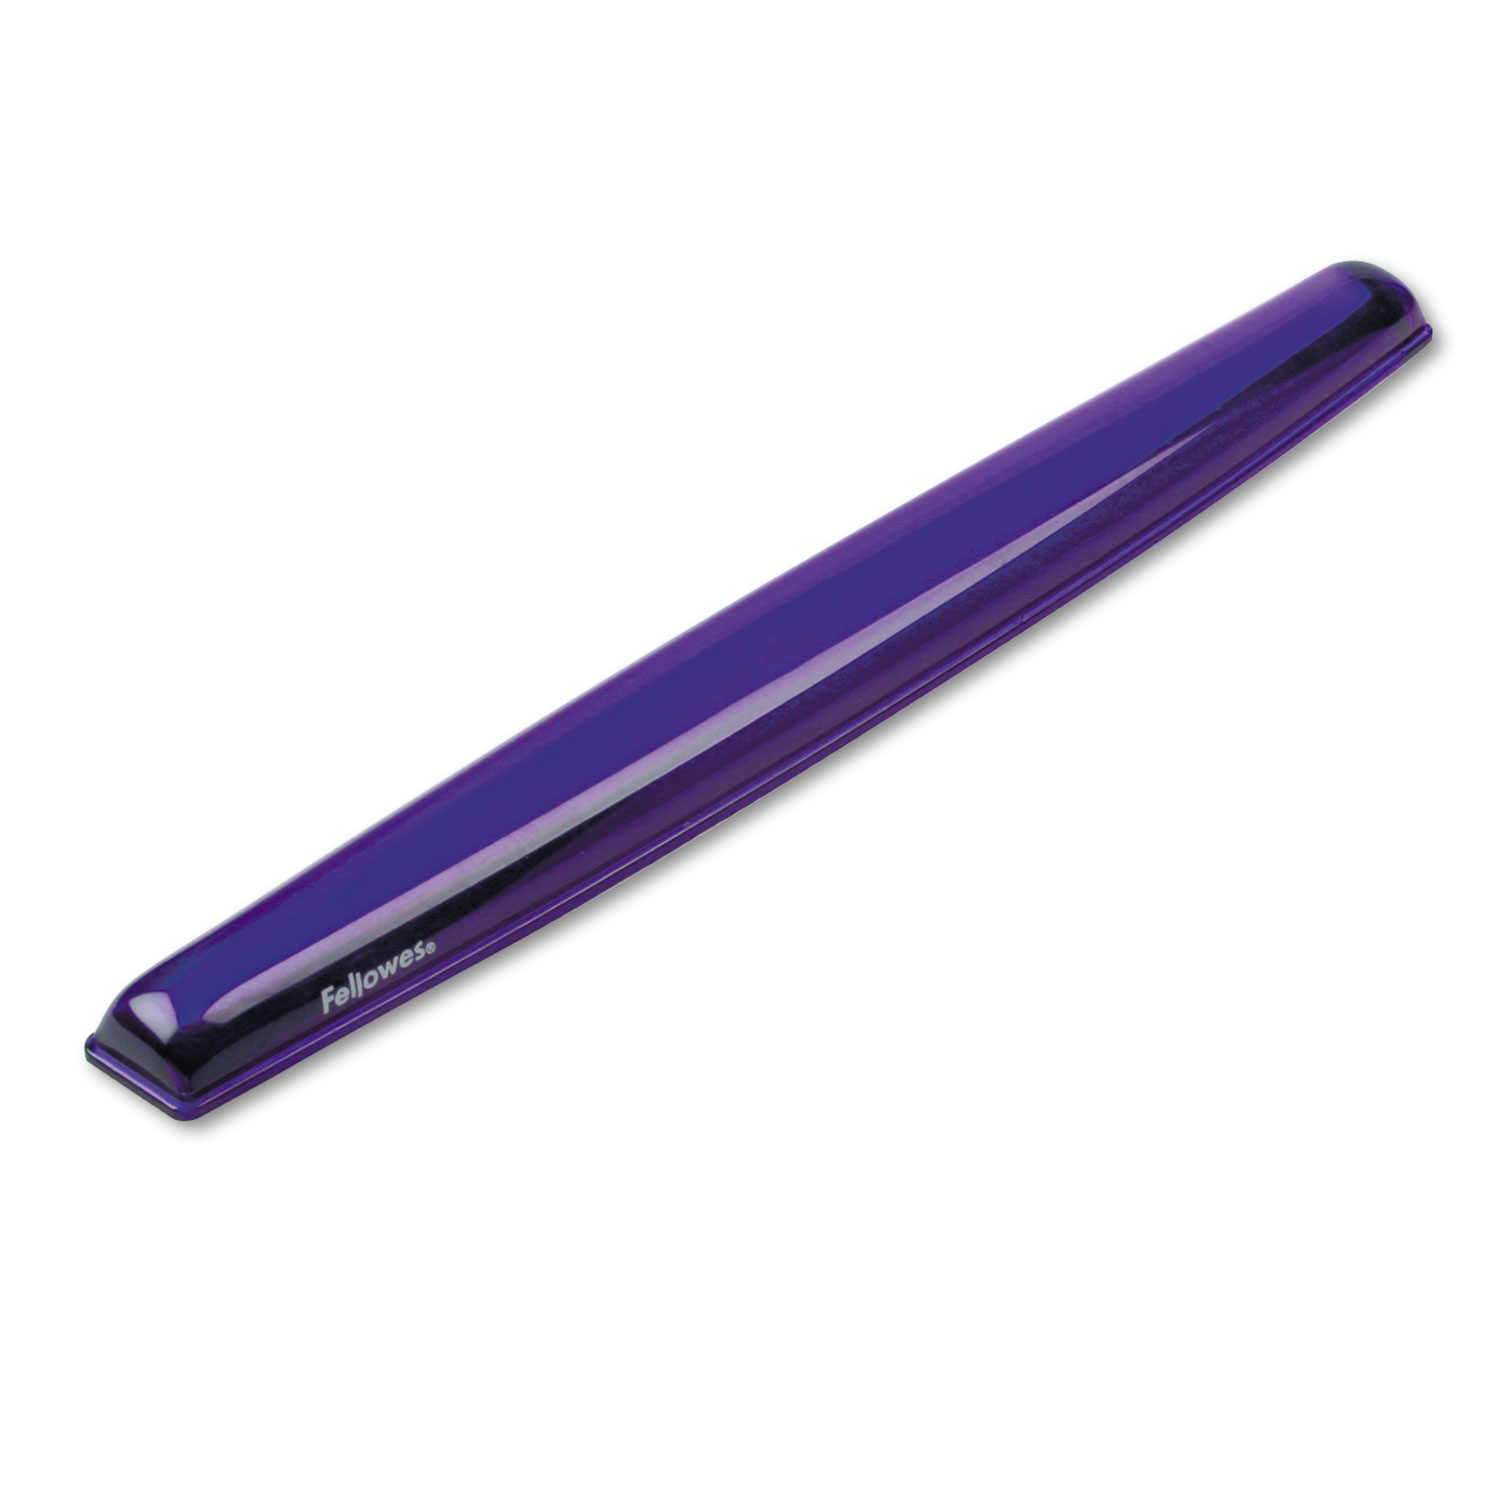 Gel Crystals Keyboard Wrist Rest, 18.5" x 2.25", Purple